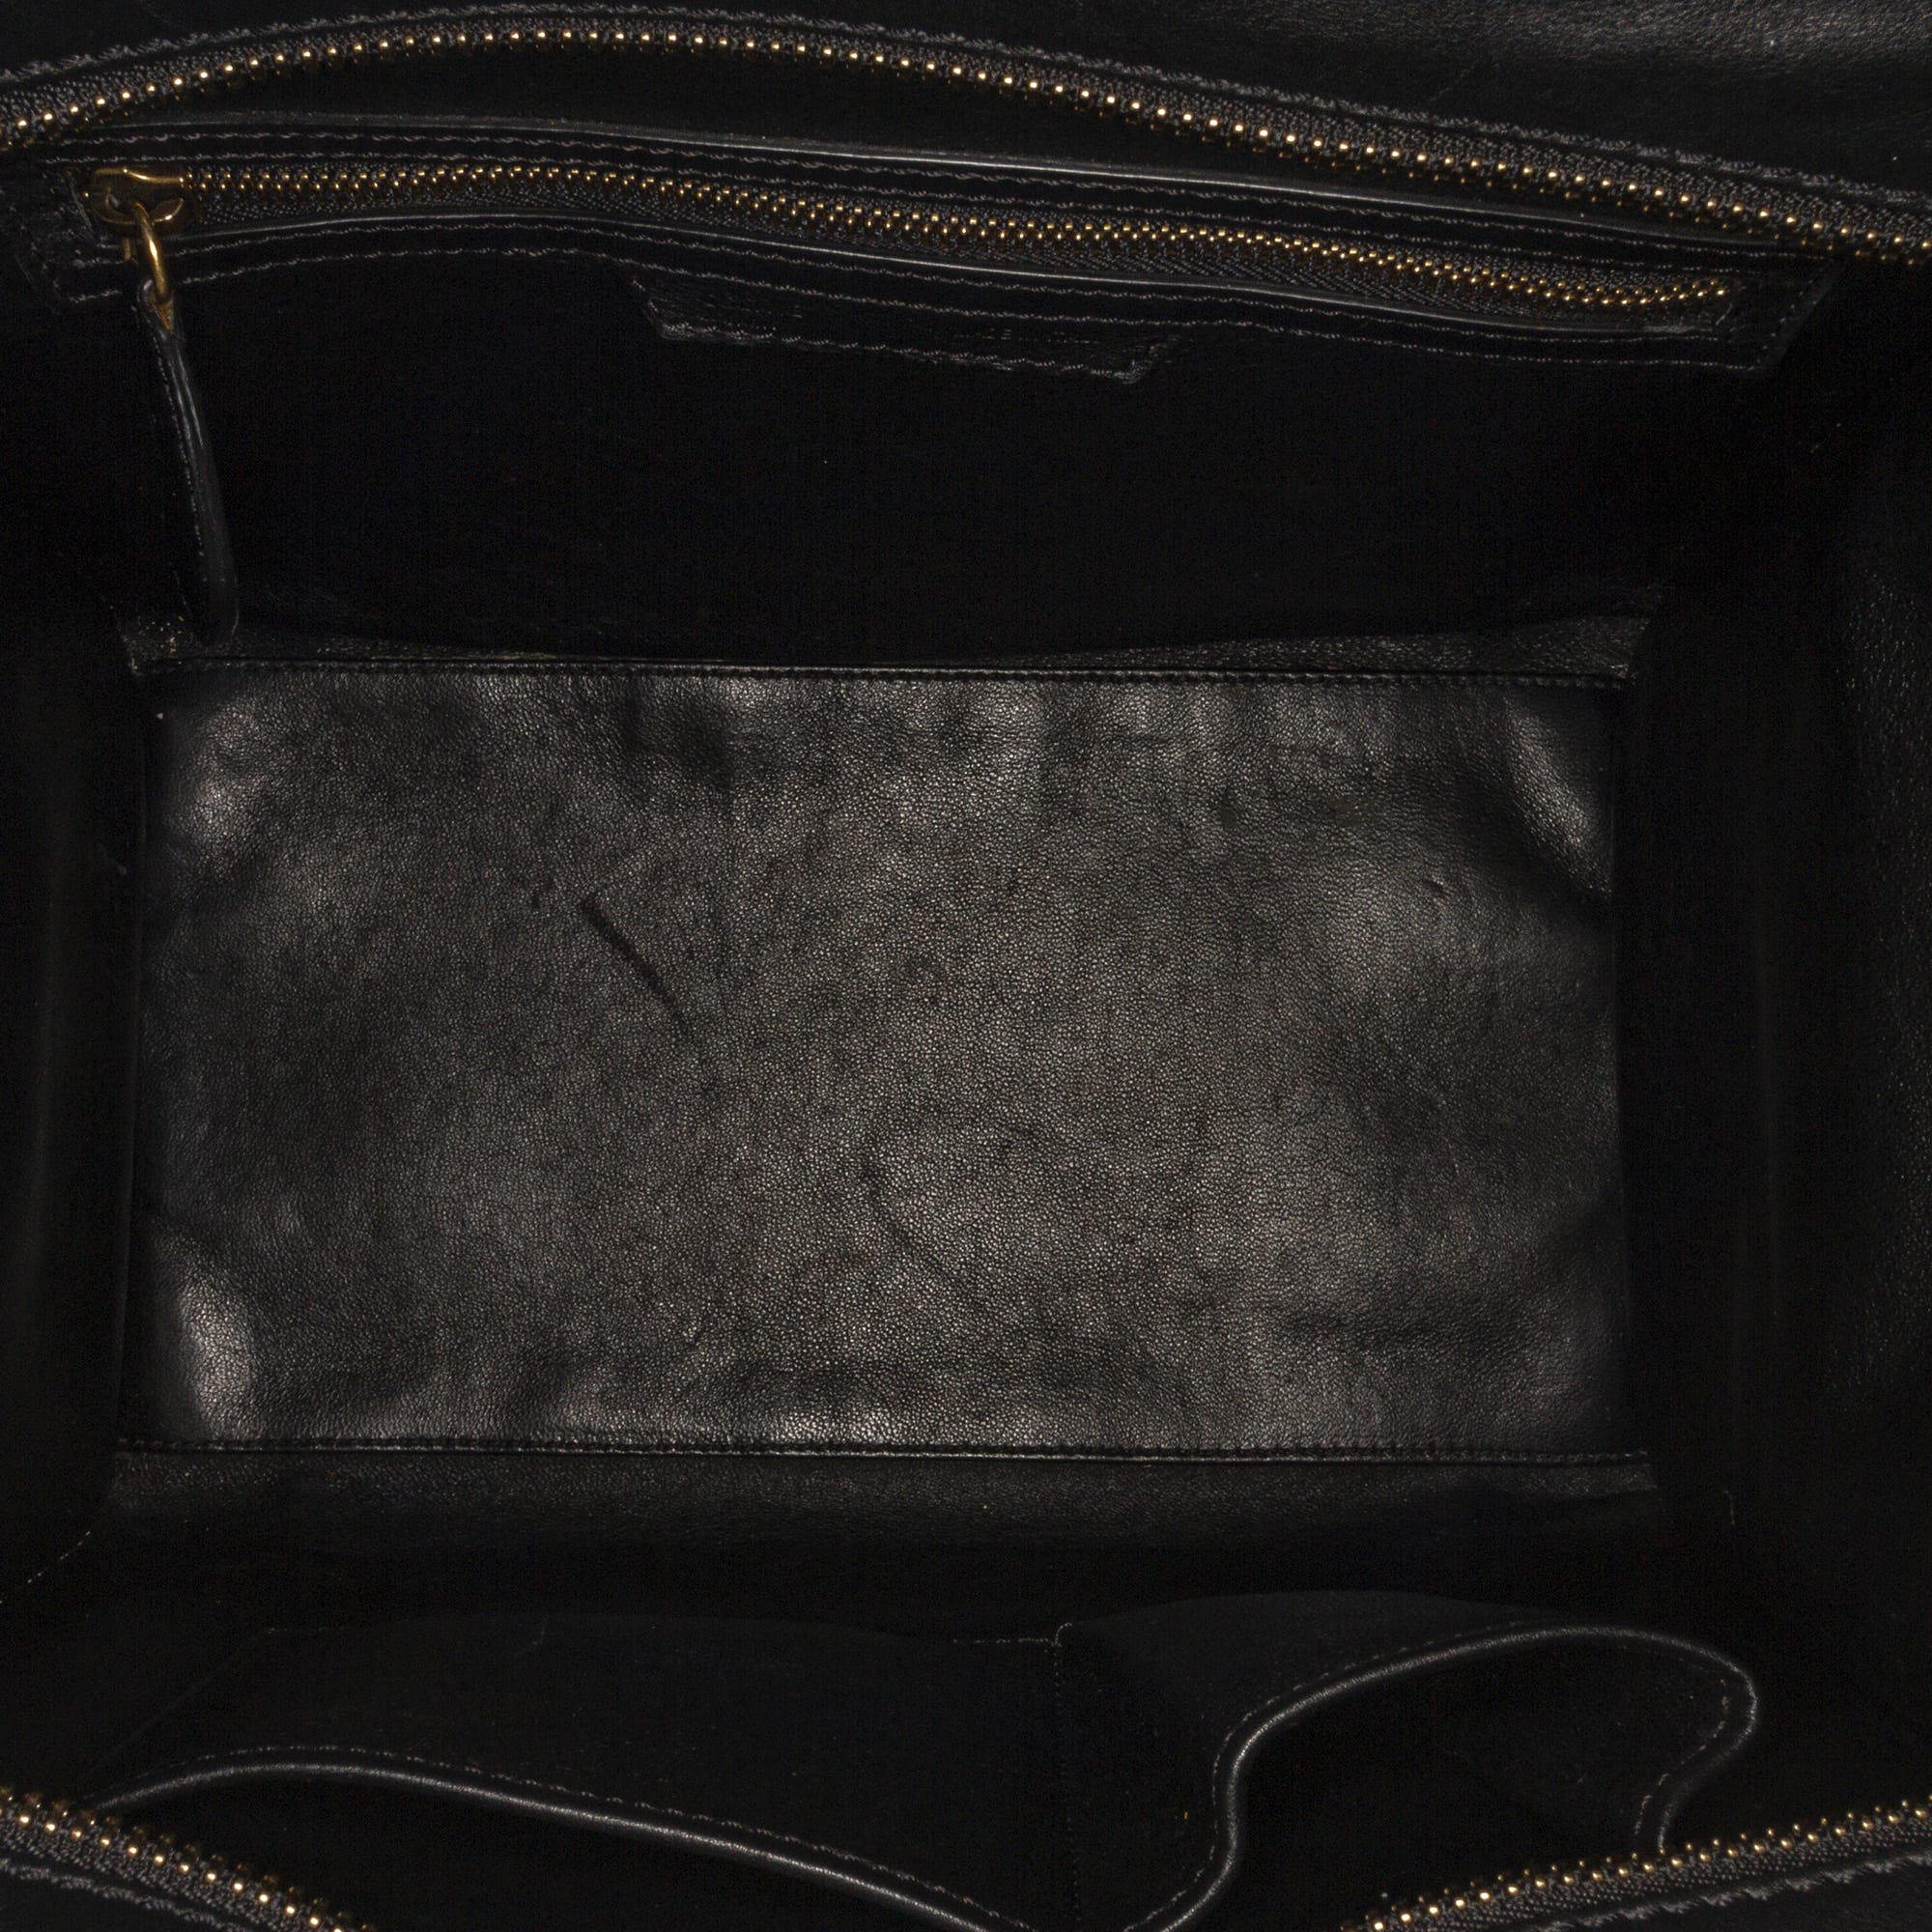 Celine Micro Luggage Tote Leather Handbag, ONESIZE